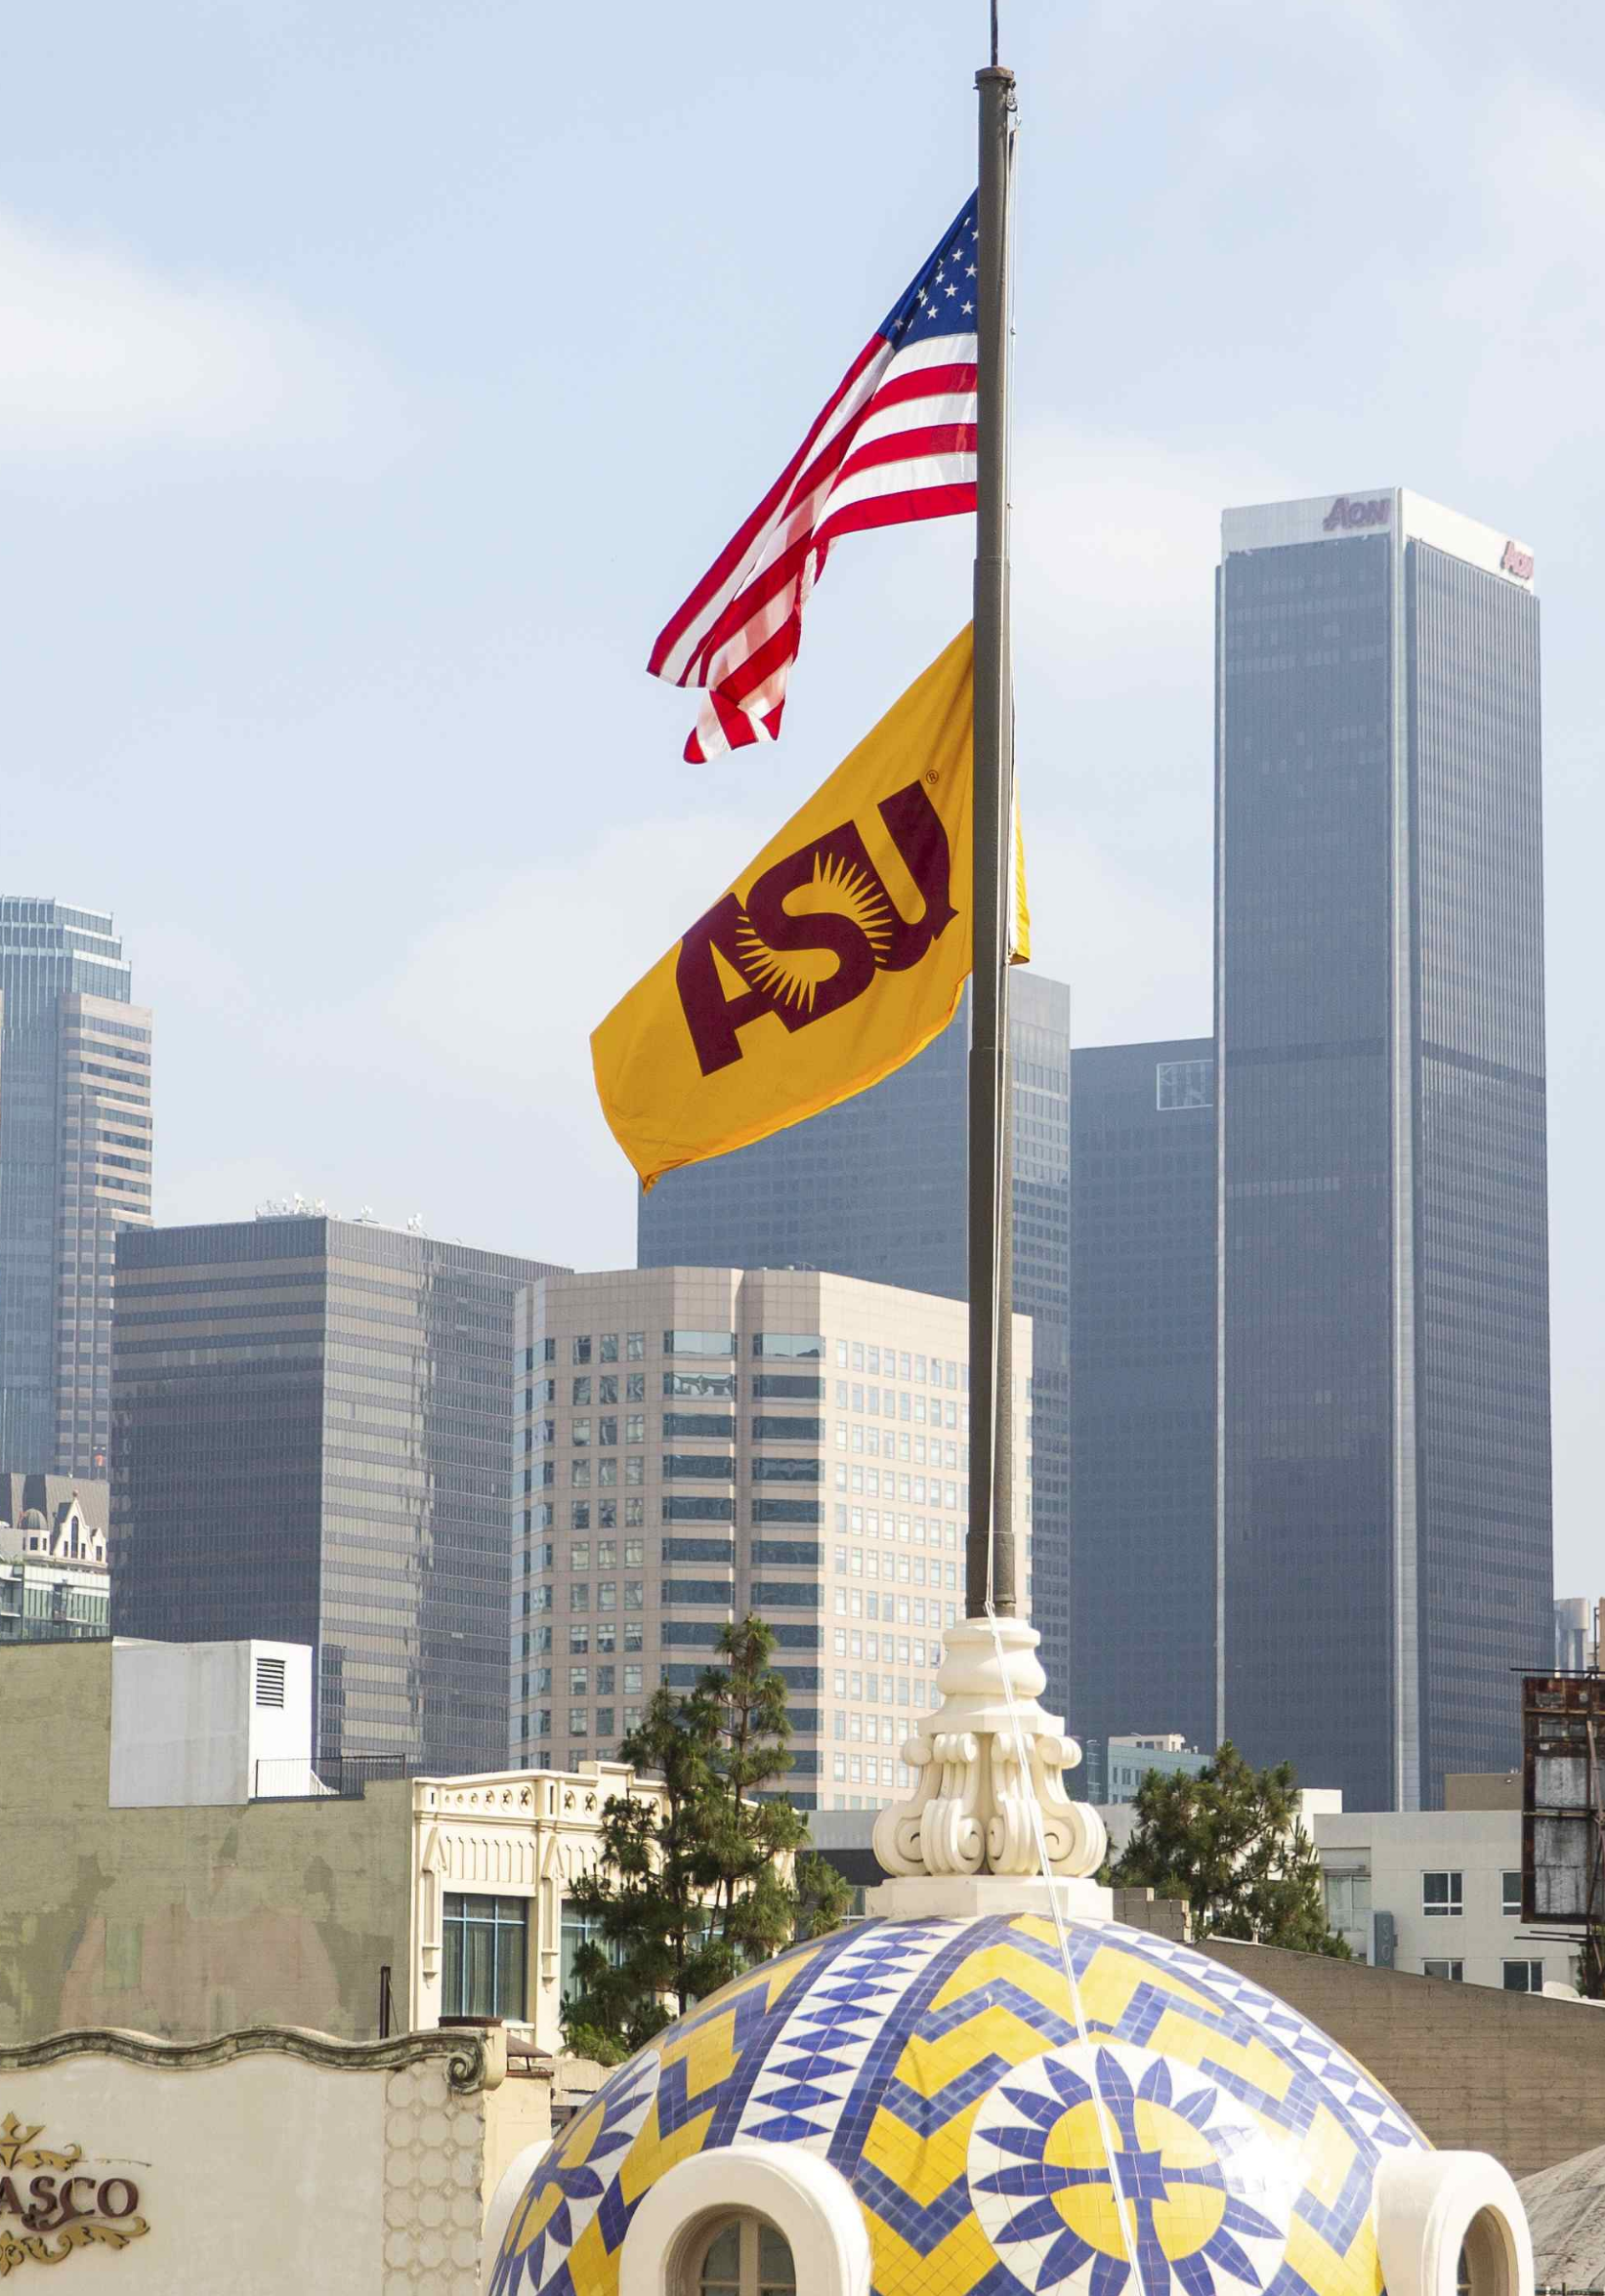 U.S. and ASU flags above ASU in California